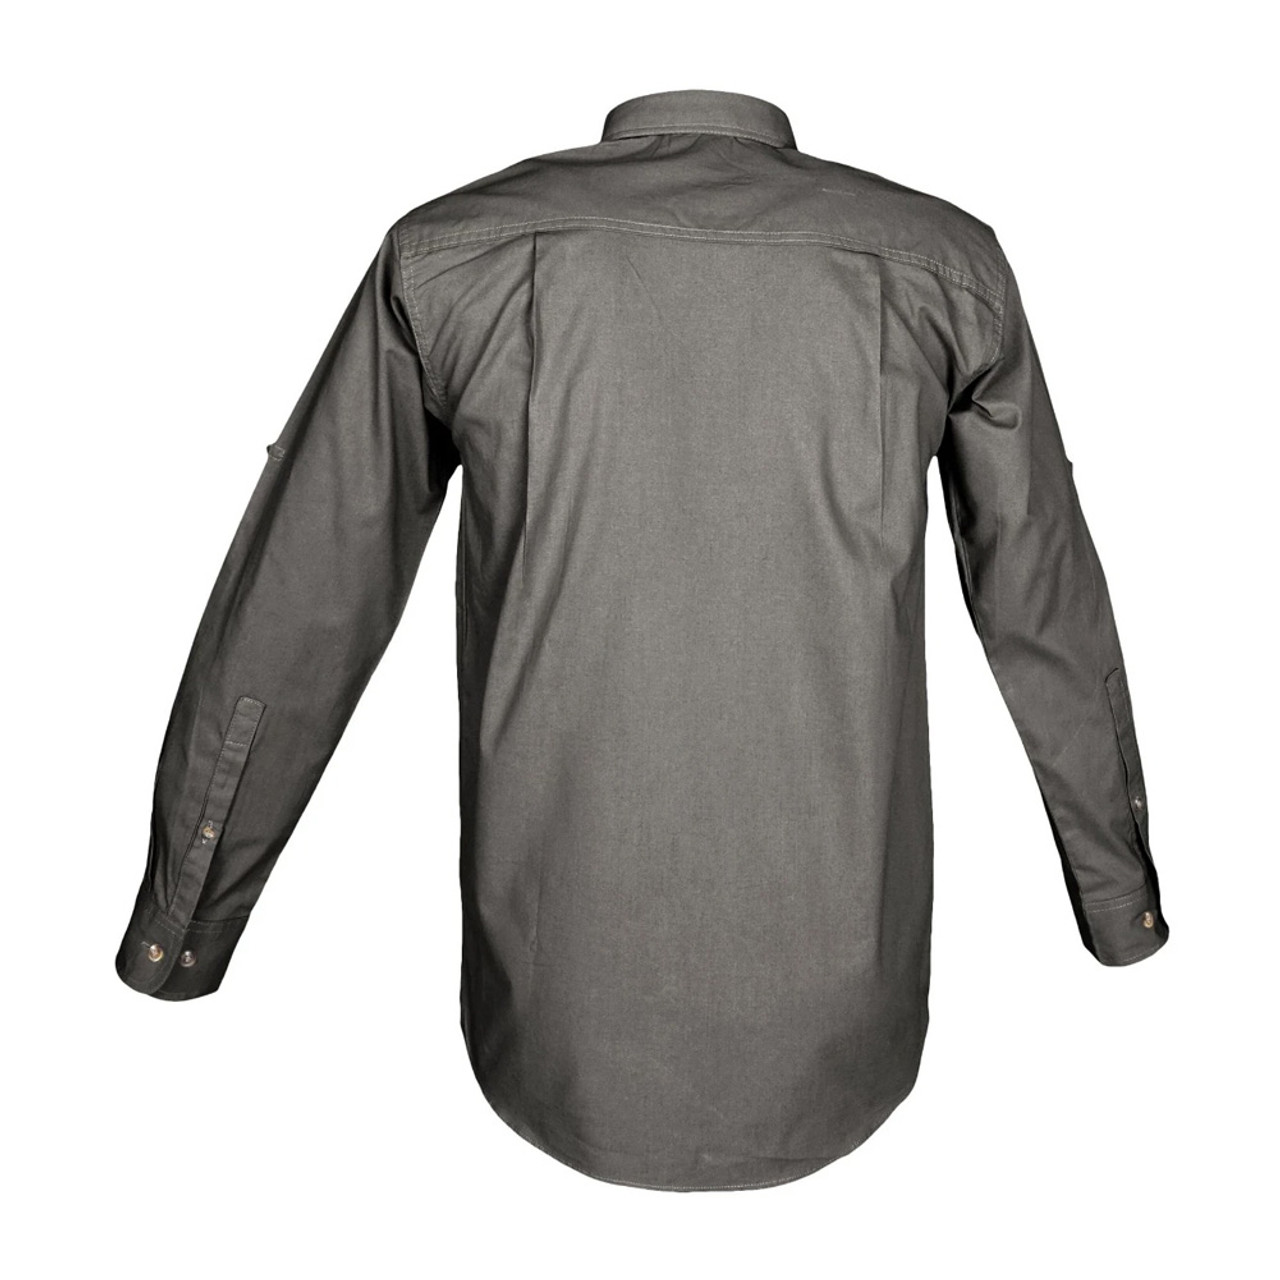 Tag Safari Shooter Shirt for Men Long Sleeve, 100% Cotton, Sun